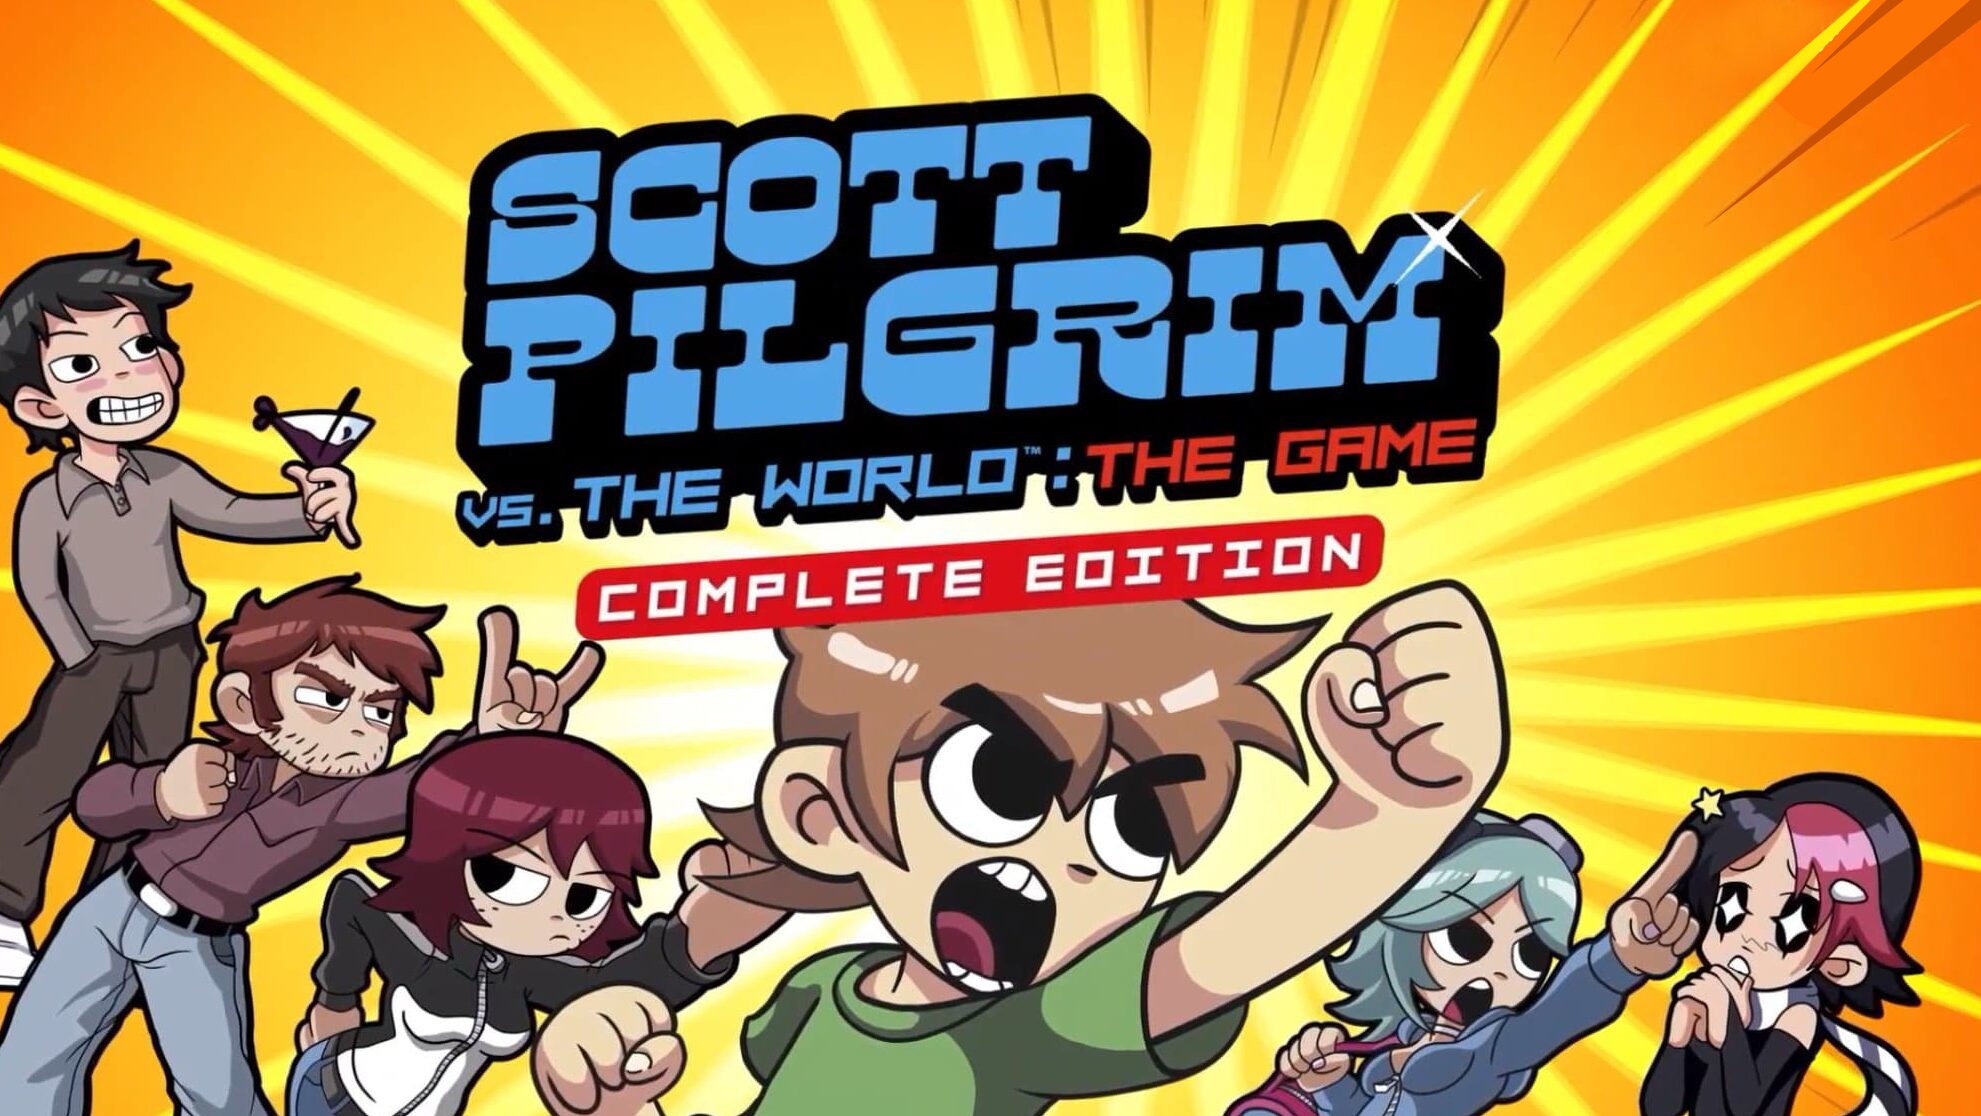 Scott Pilgrim vs. The World™: The Game – Complete Edition on Steam